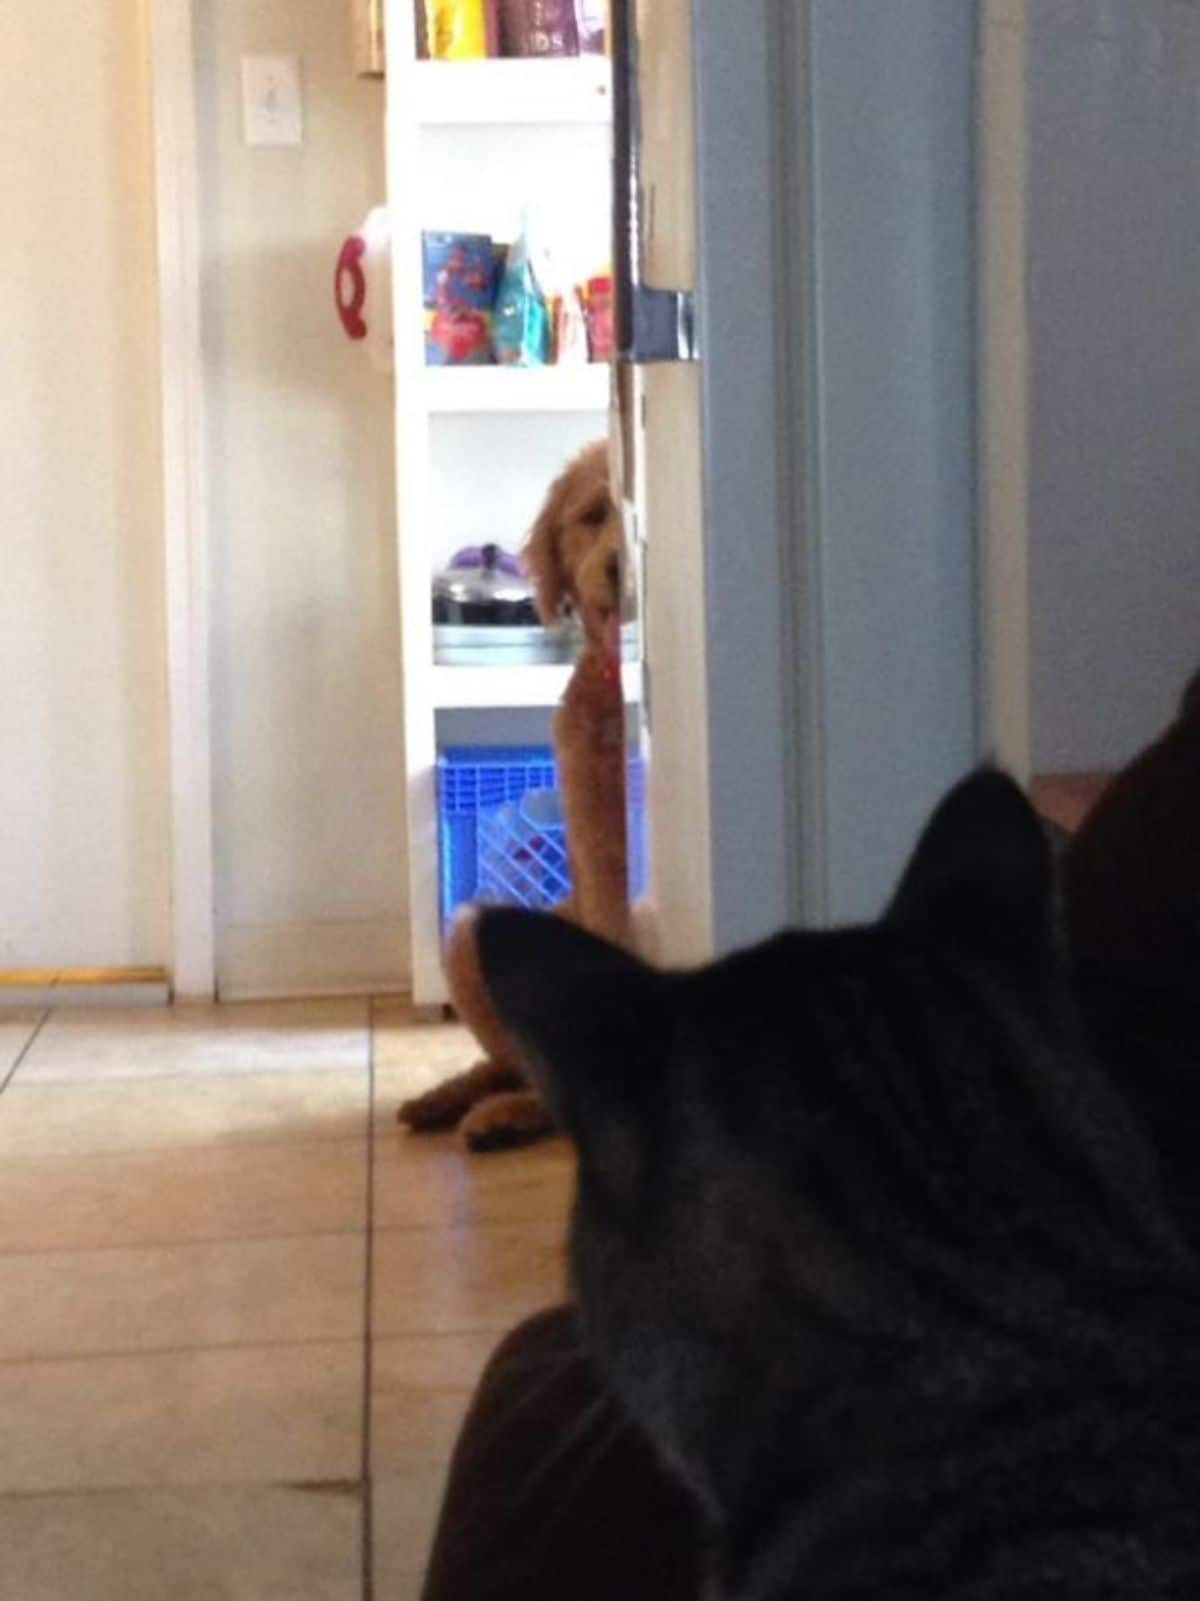 golden retriever puppy hiding behind a door from a grey tabby cat on a brown sofa